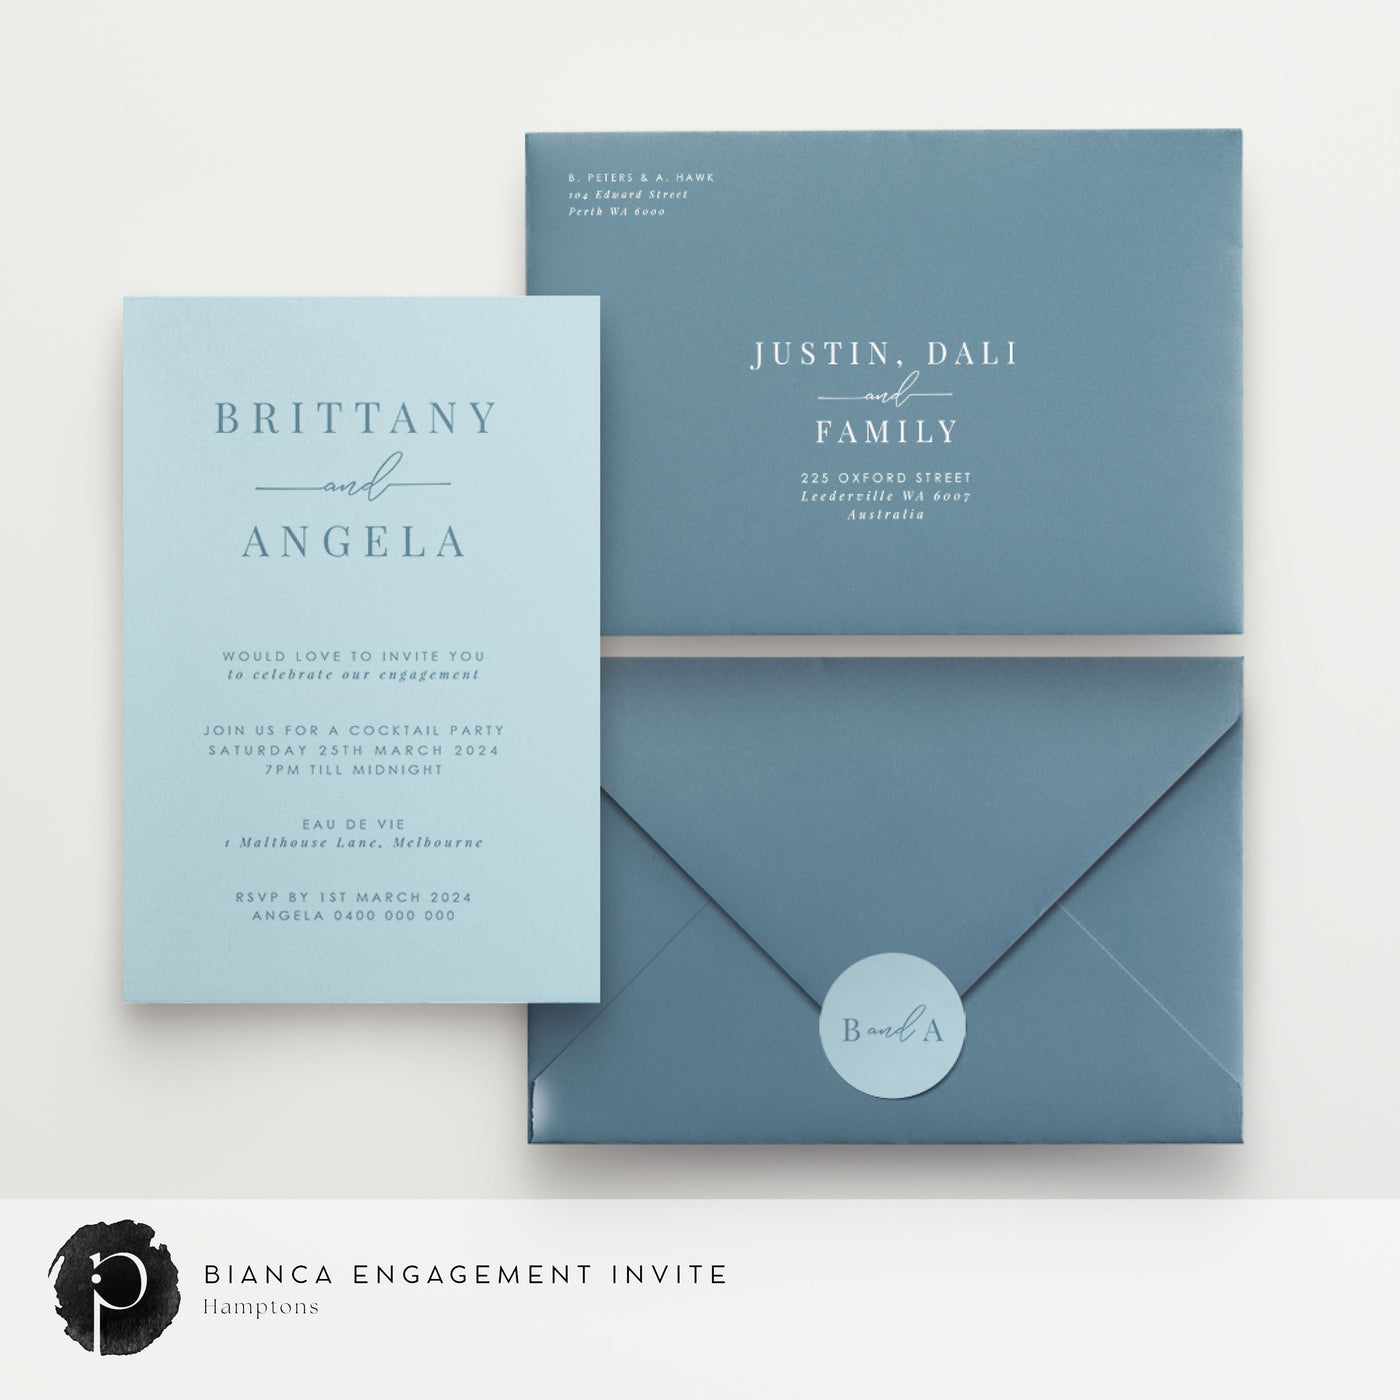 Bianca - Engagement Invitations